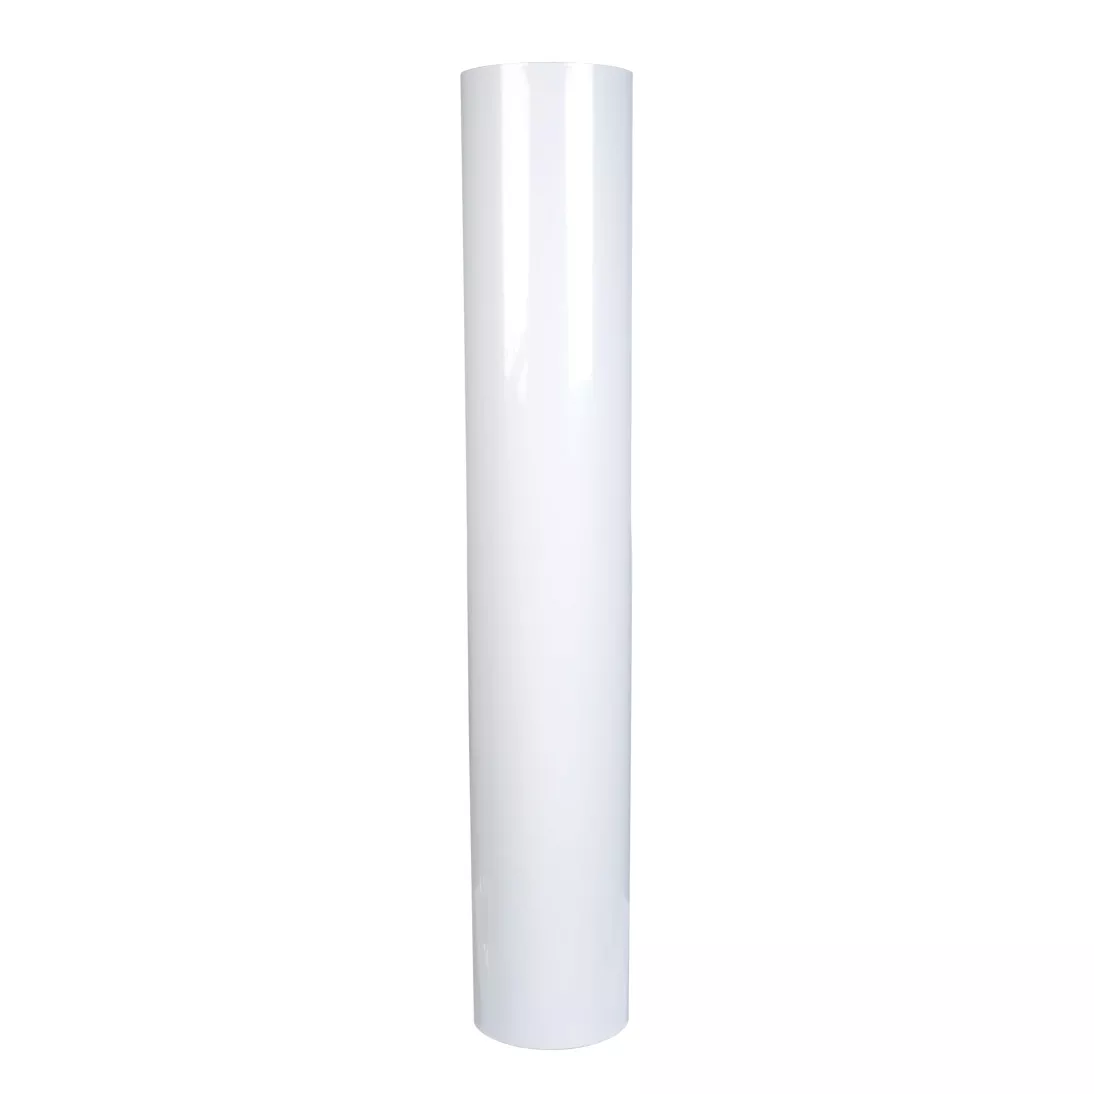 3M™ VentureClad™ Heavy Duty Insulation Jacketing Tape 1579GCW-WM, White,
30 in x 25 yd, 1 roll per case